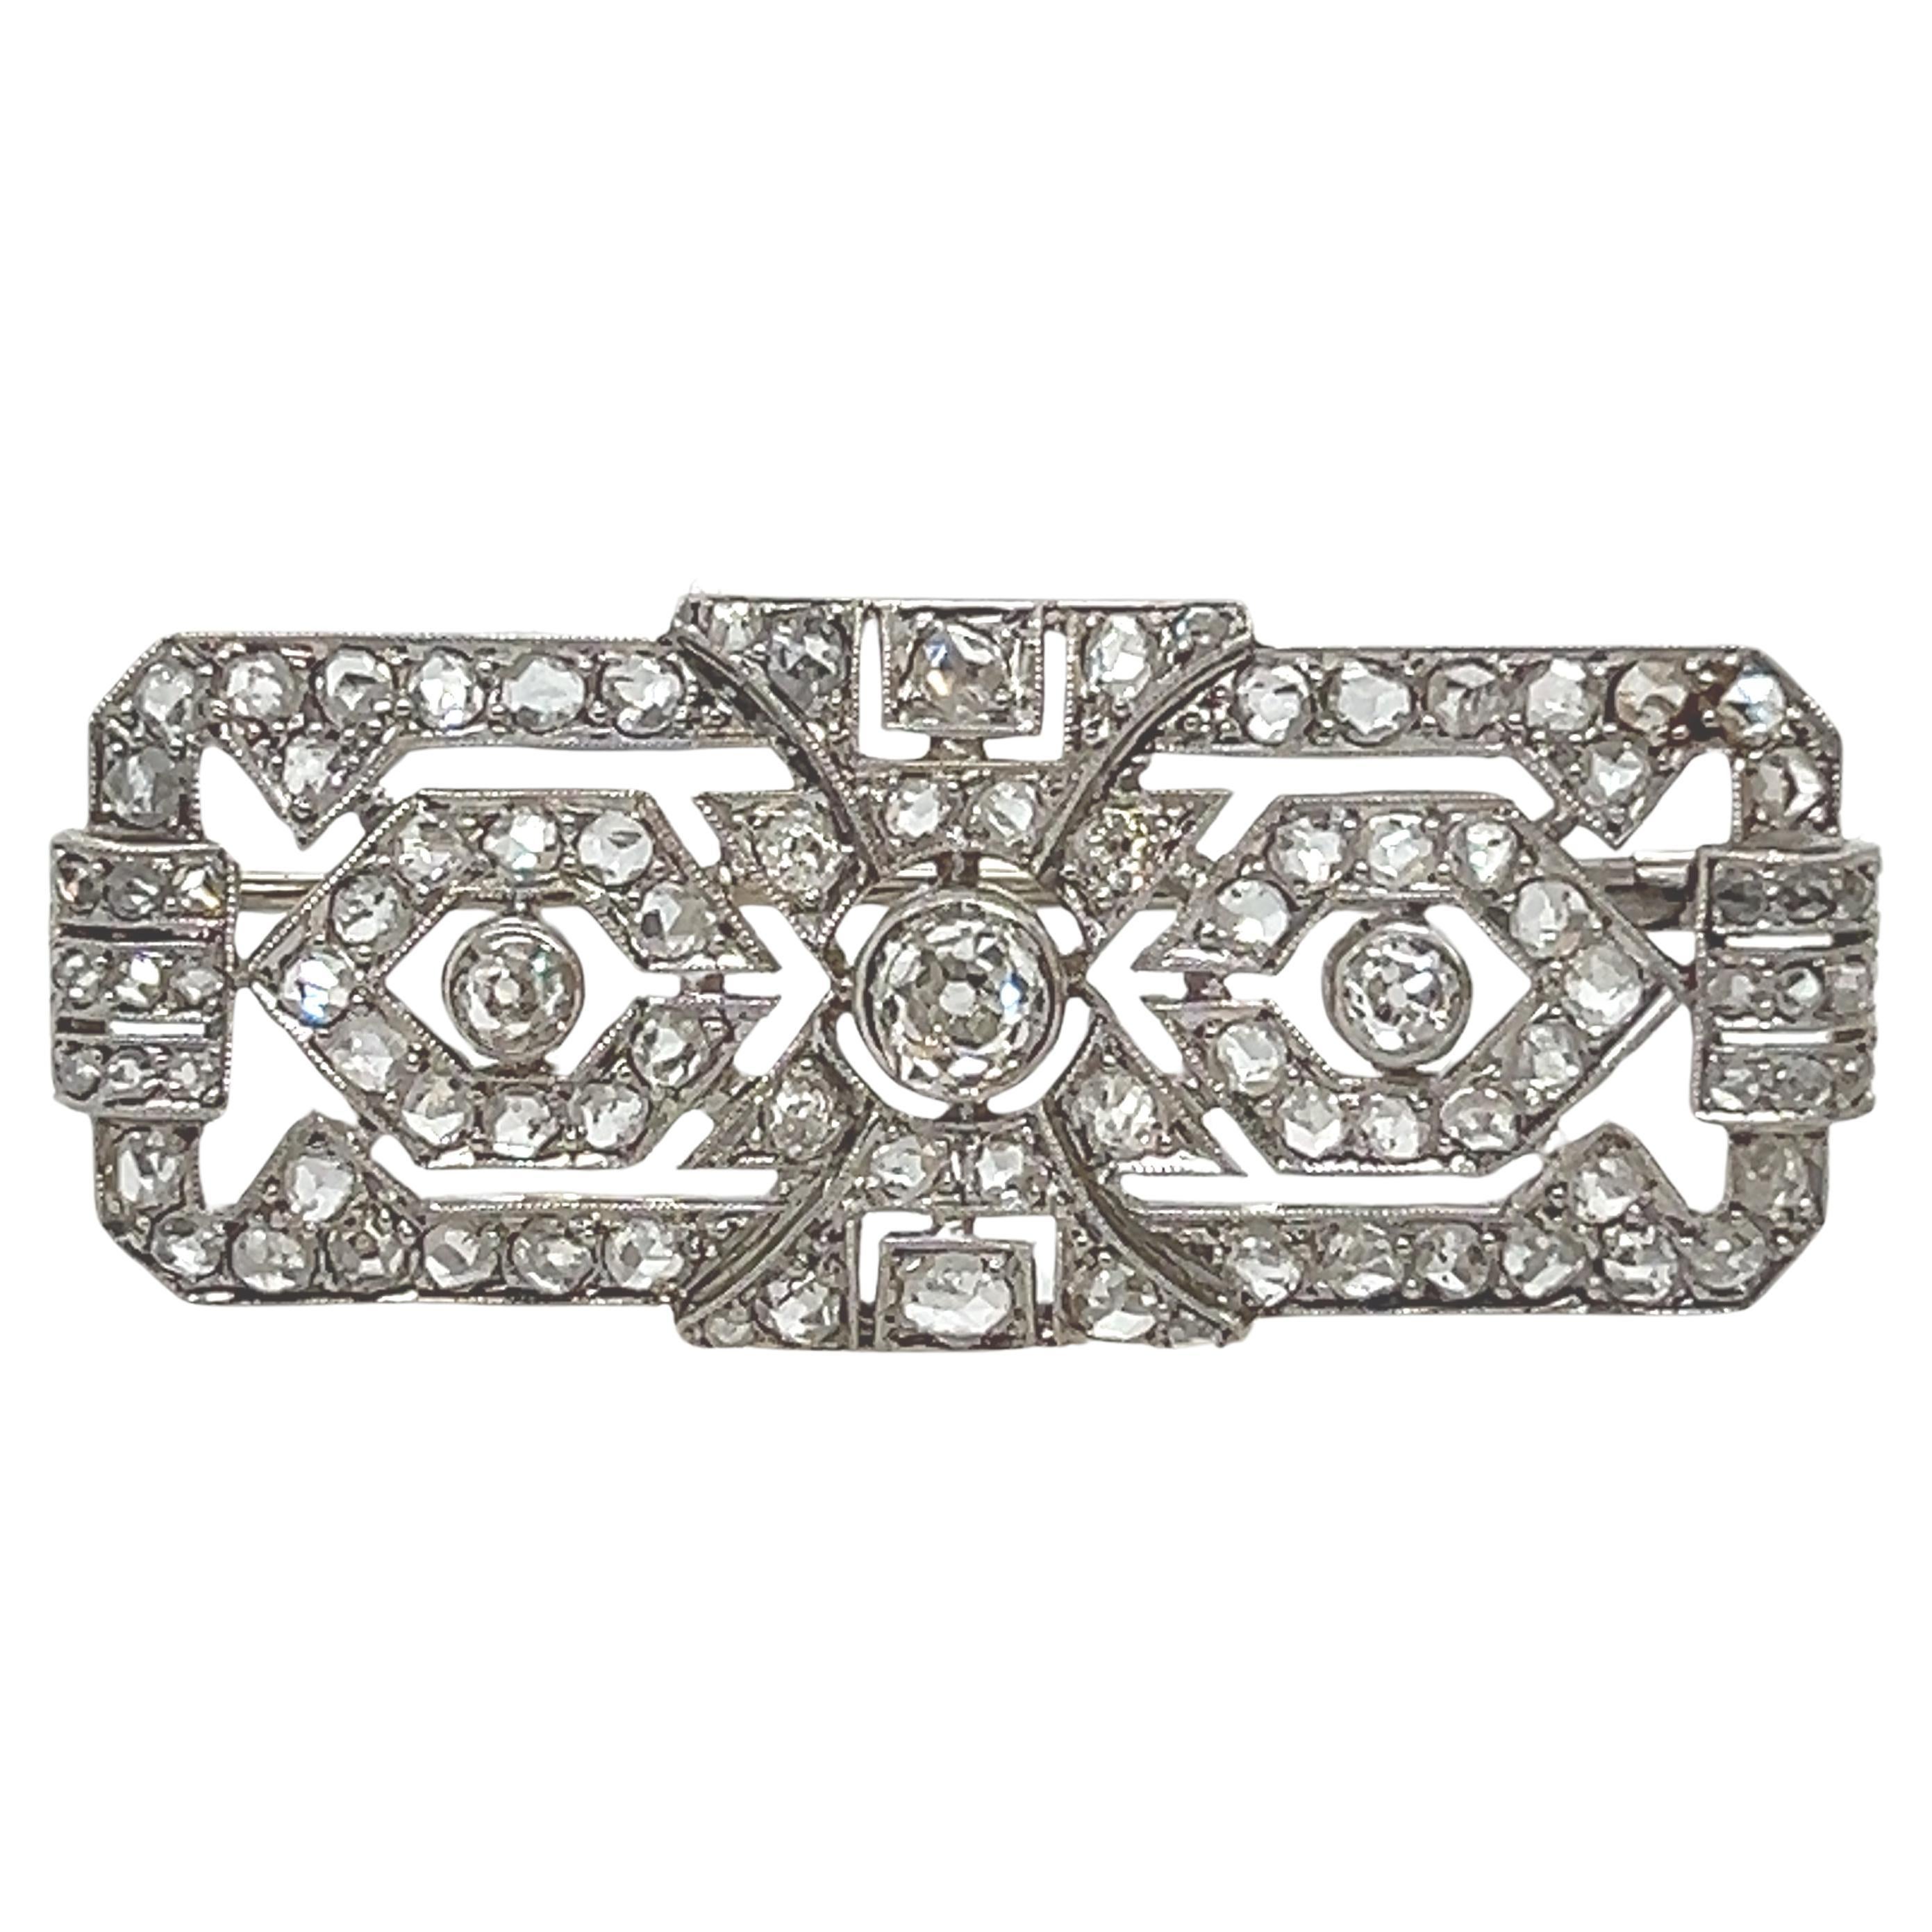 Art Deco Brooch Adorned with 3.01 Carat Diamonds And Platinum